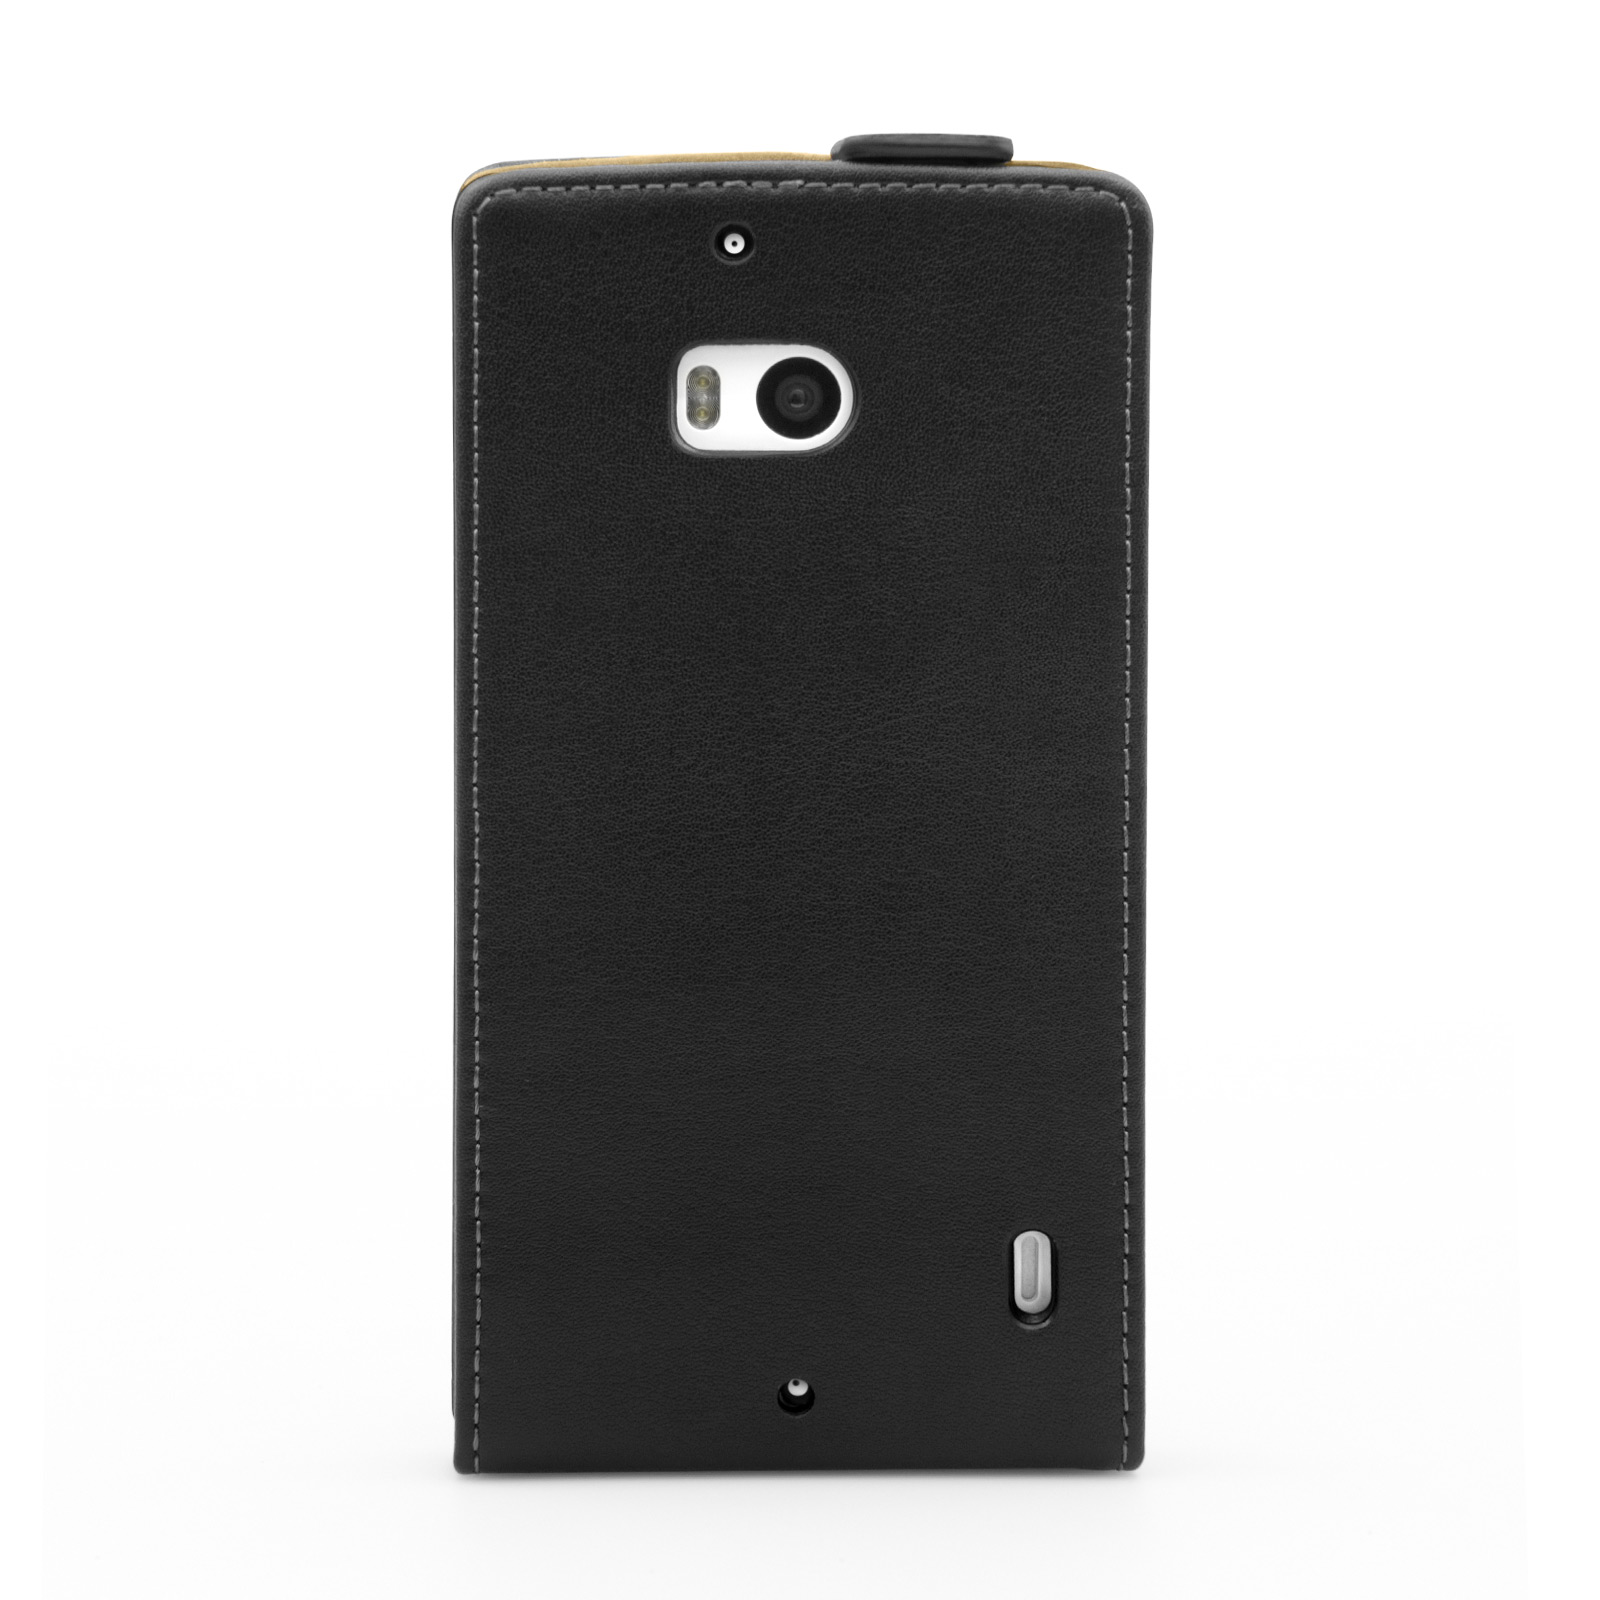 Caseflex Nokia Lumia 930 Real Leather Flip Case - Black